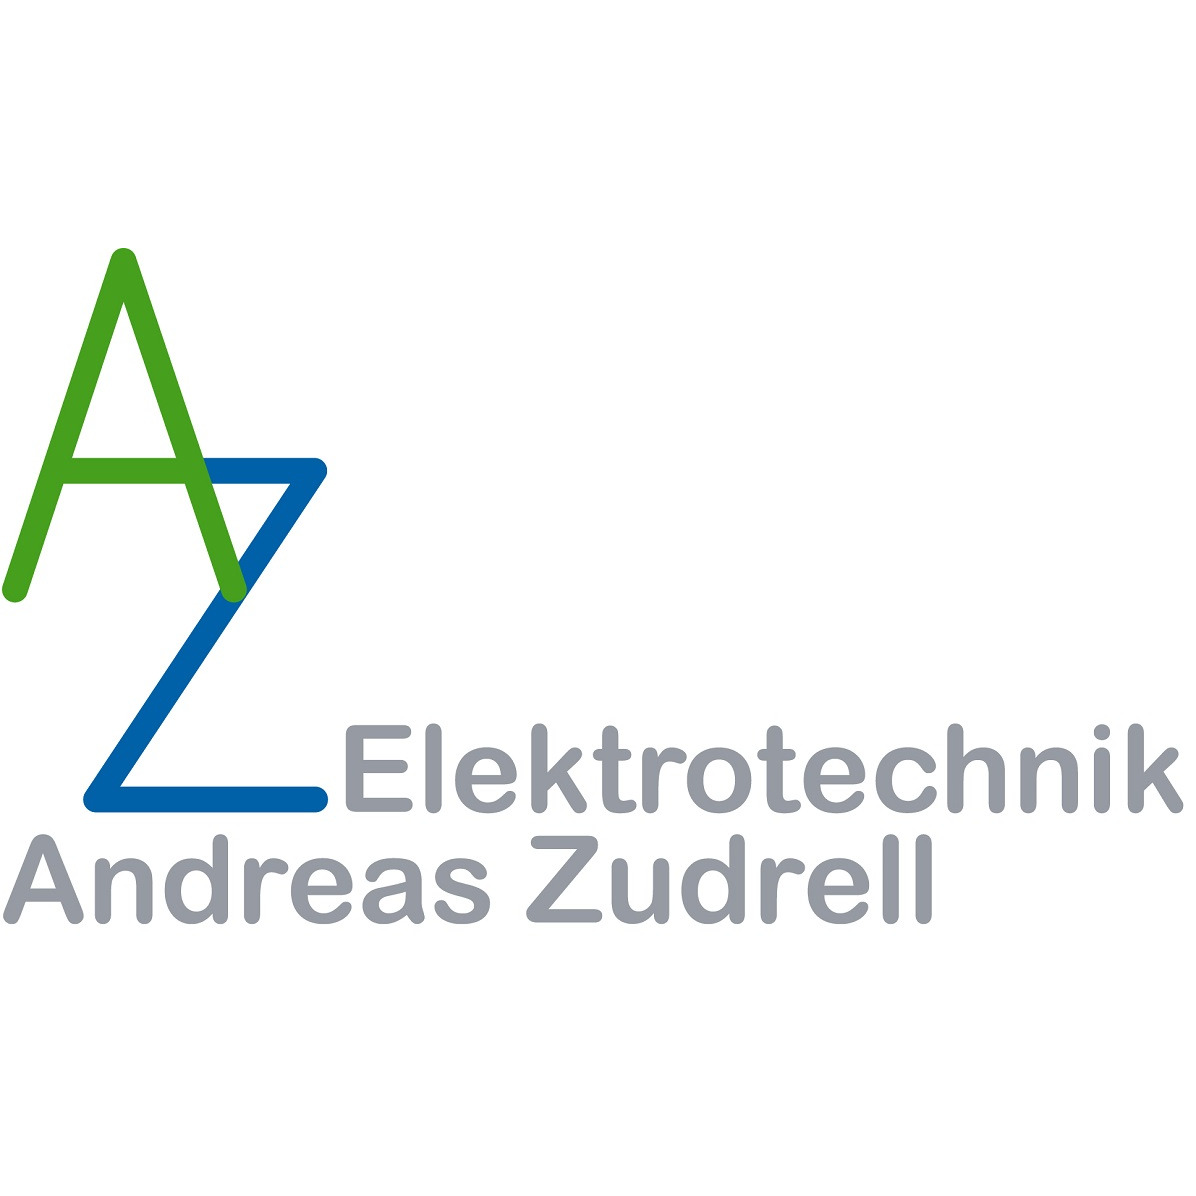 AZ Elektrotechnik - Andreas Zudrell Logo